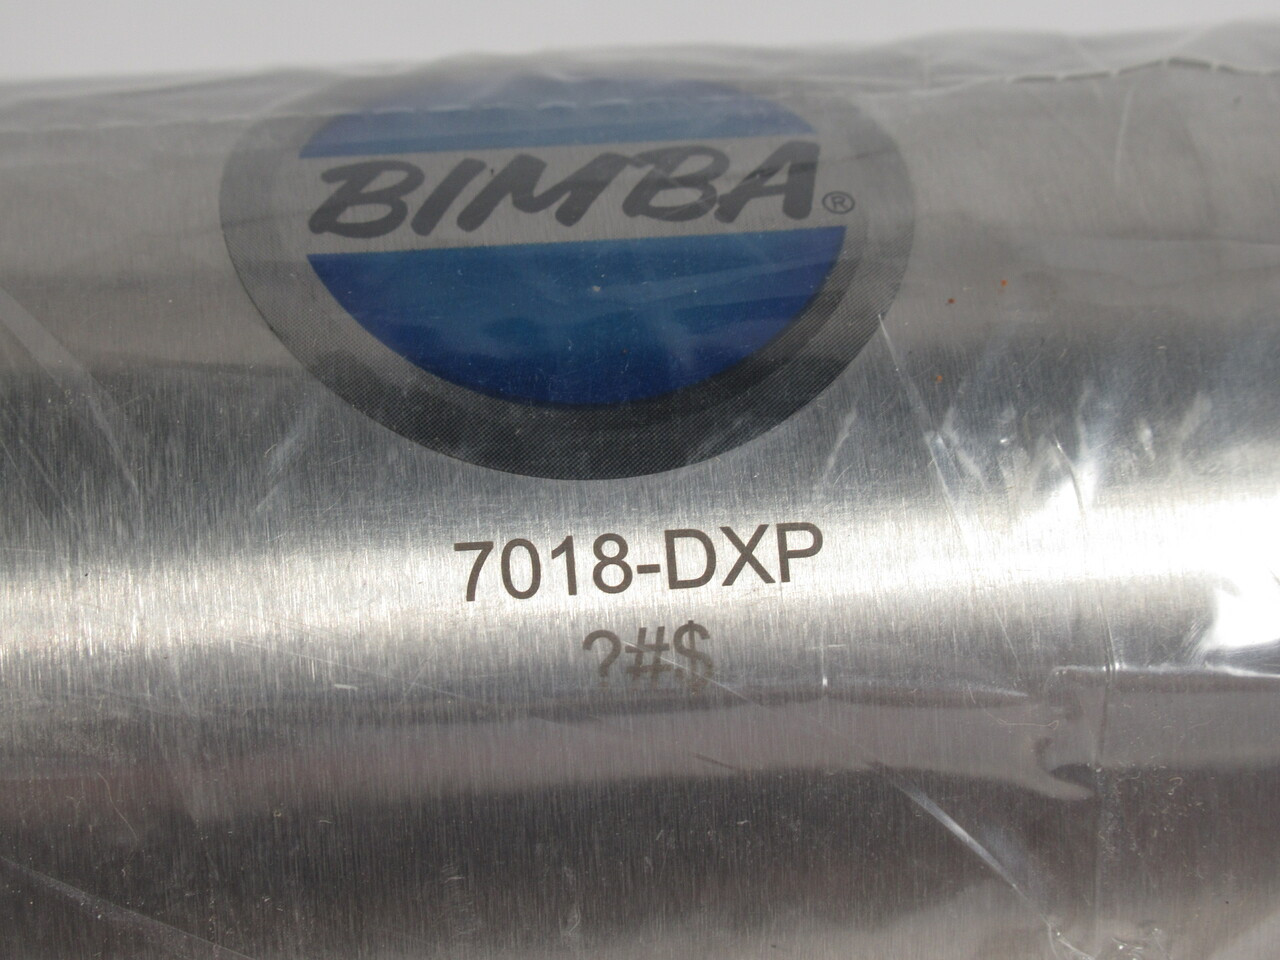 Bimba 7018-DXP Pneumatic Cylinder 3" Bore 18" Stroke Double Acting NEW